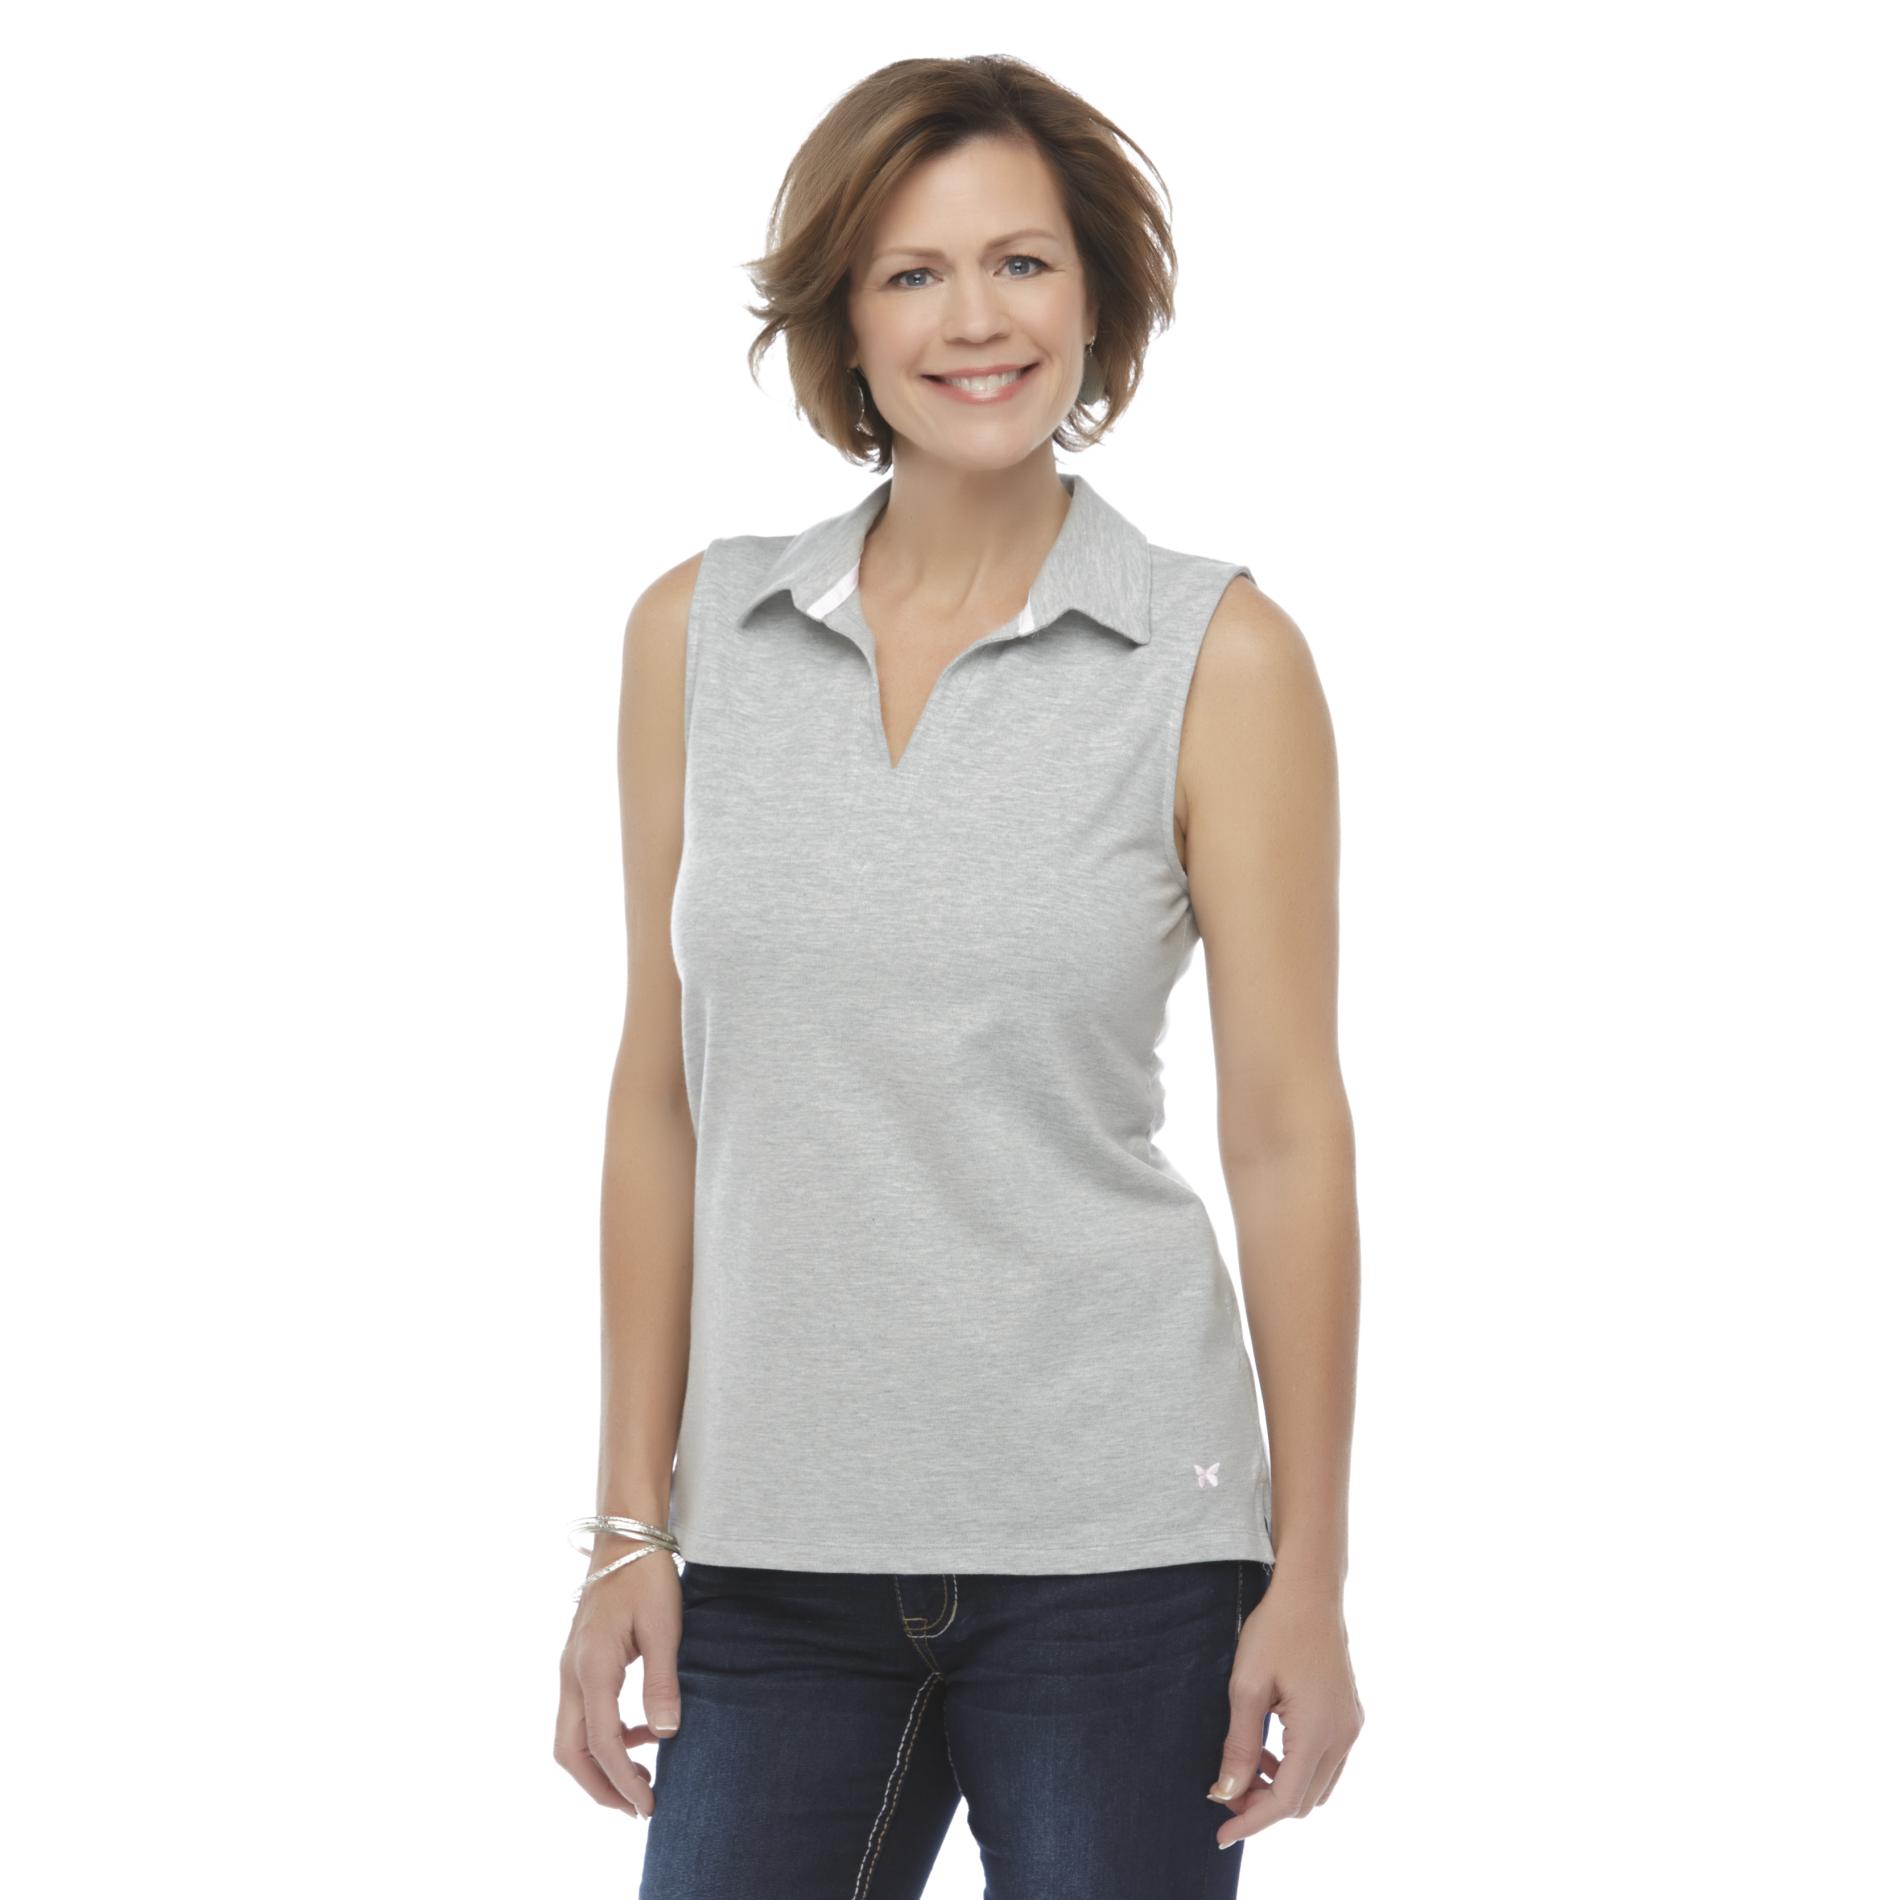 Basic Editions Women's Sleeveless Pique Polo Shirt